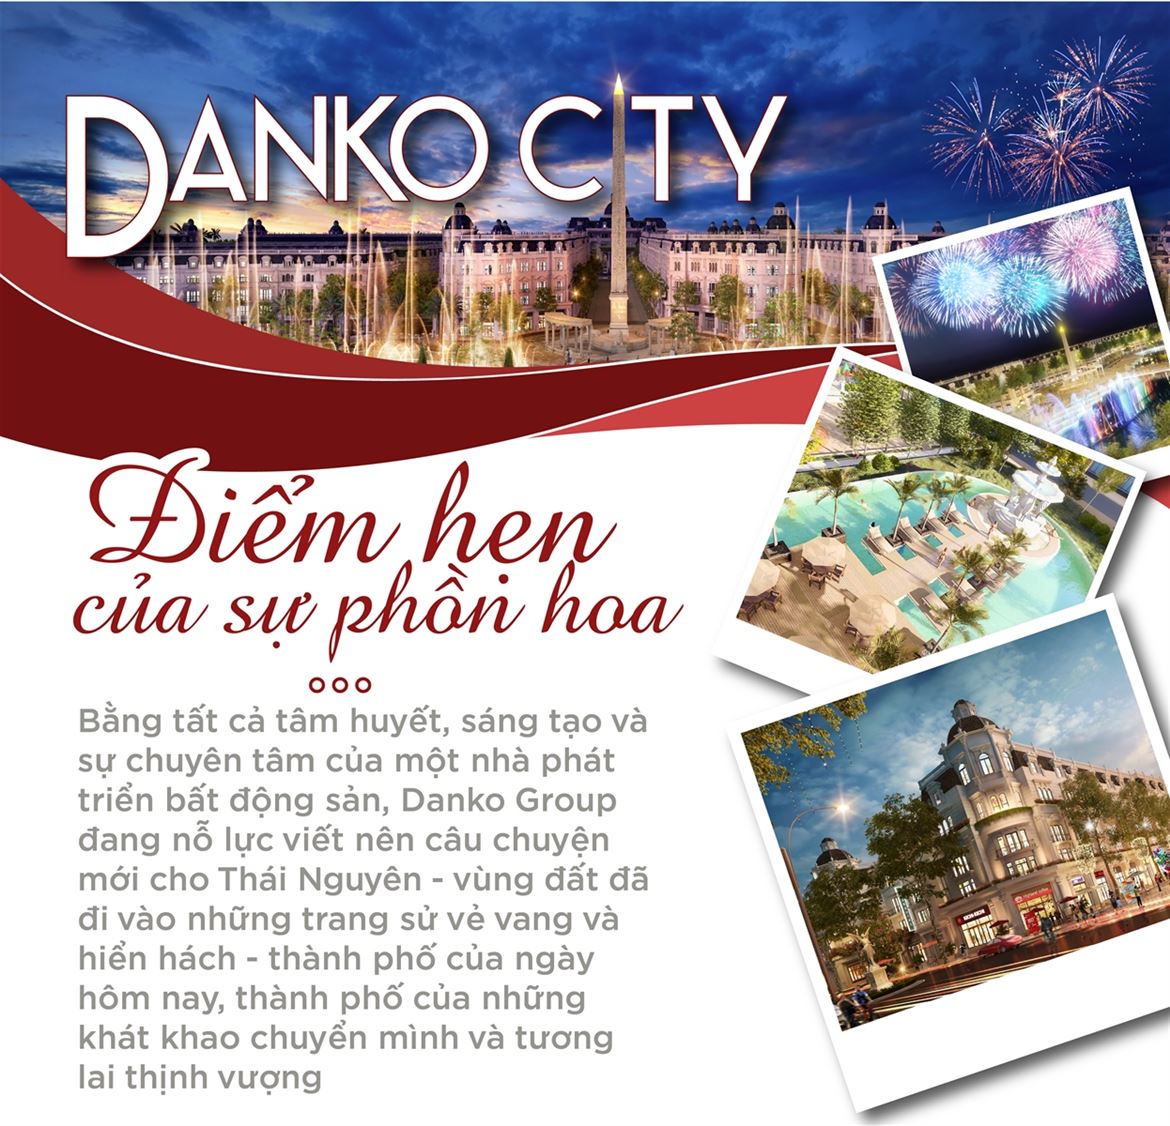 Danko City - Điểm hẹn của sự phồn hoa